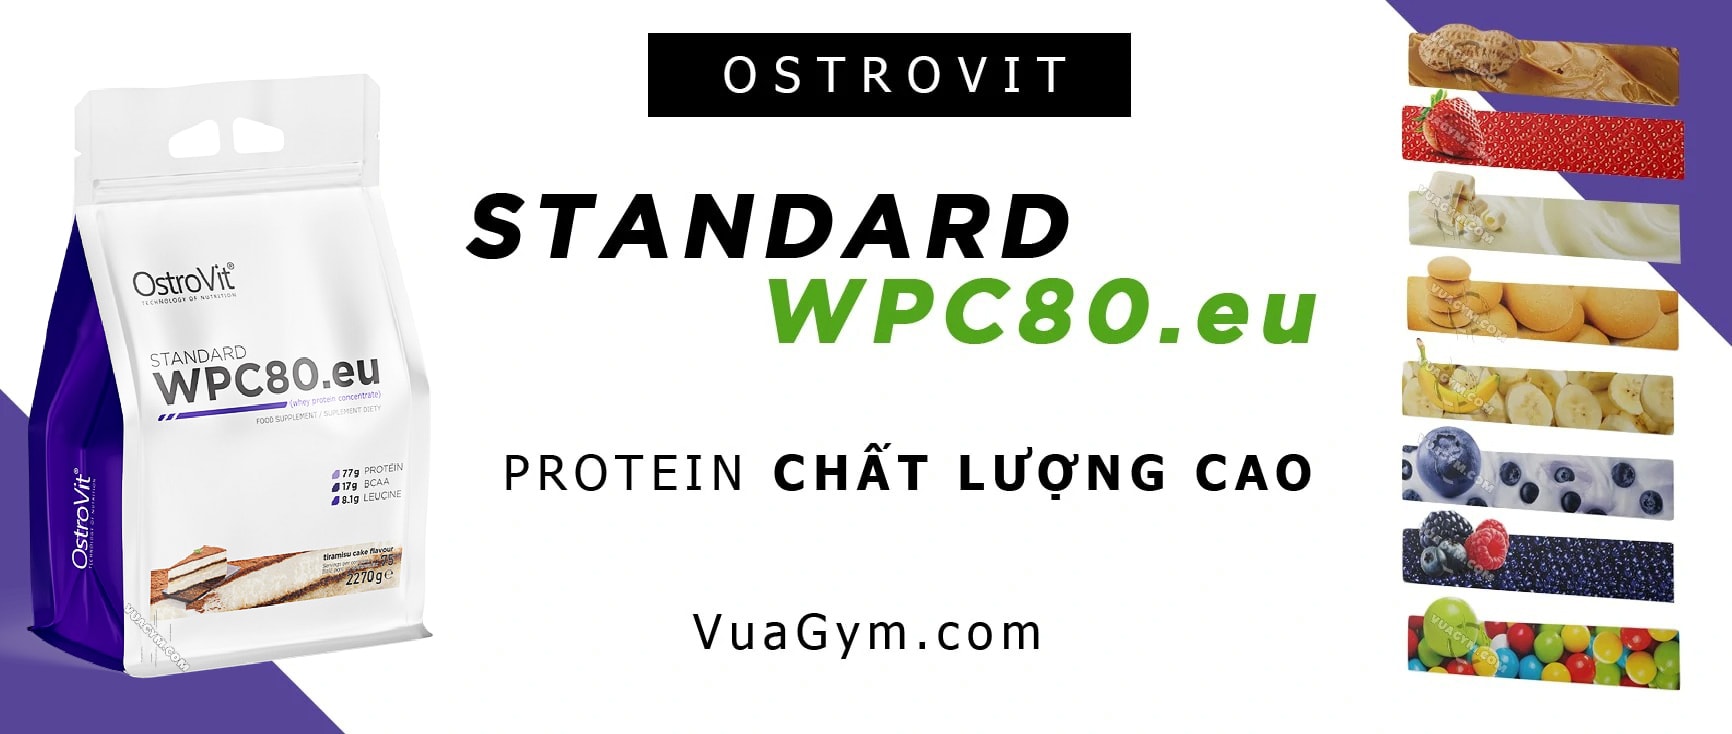 OstroVit - STANDARD WPC80.eu (2270g) - ostrovit standard wpc80 mo ta